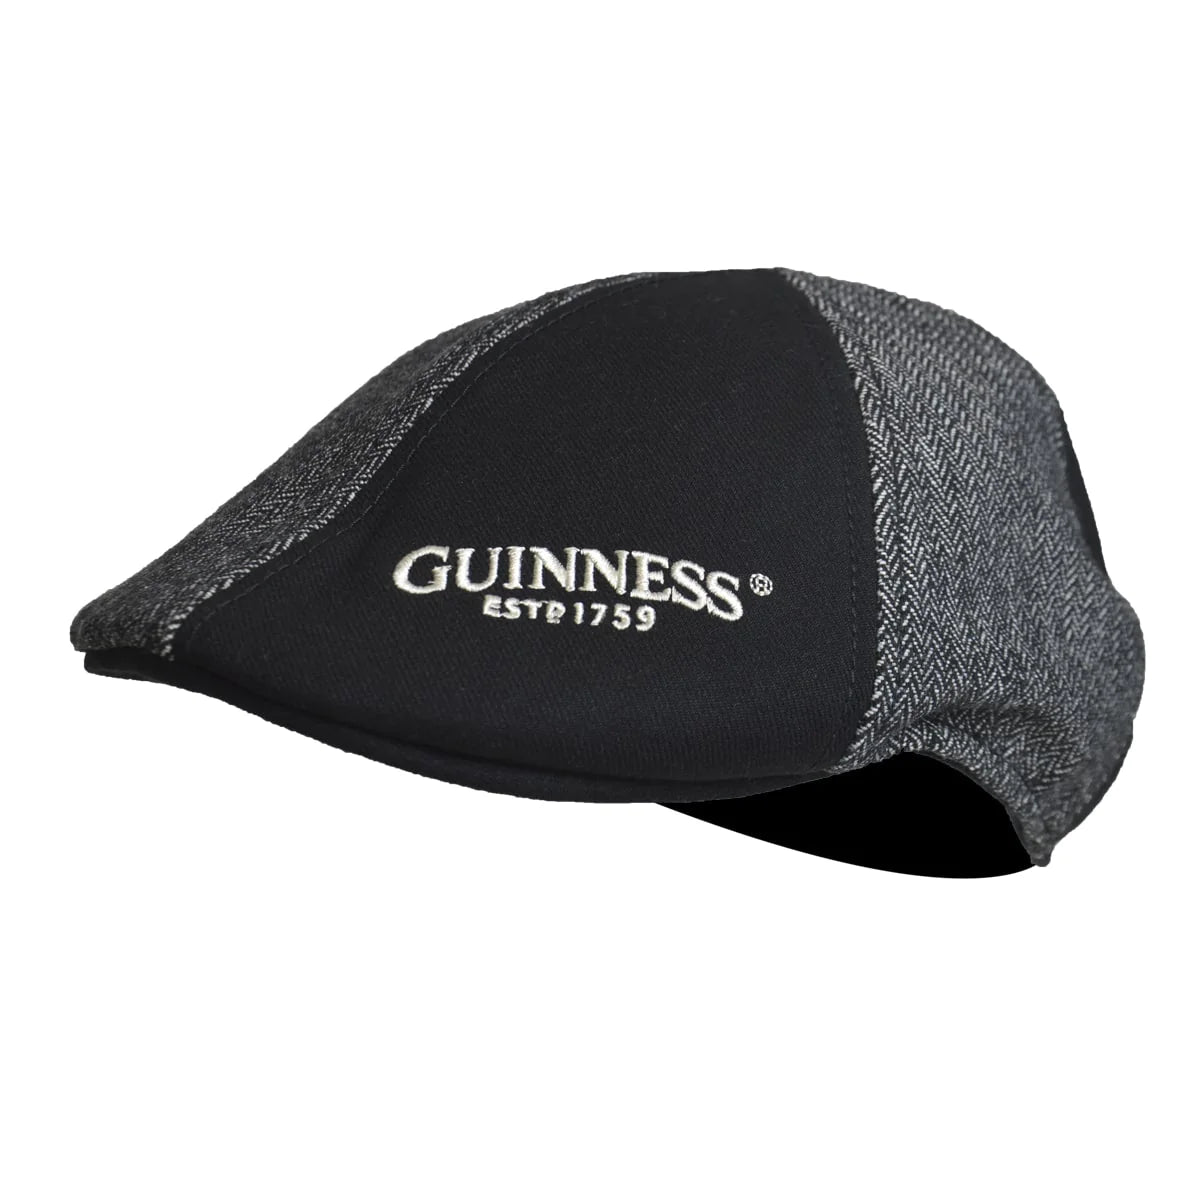 Guinness Black & Grey Wool Cap